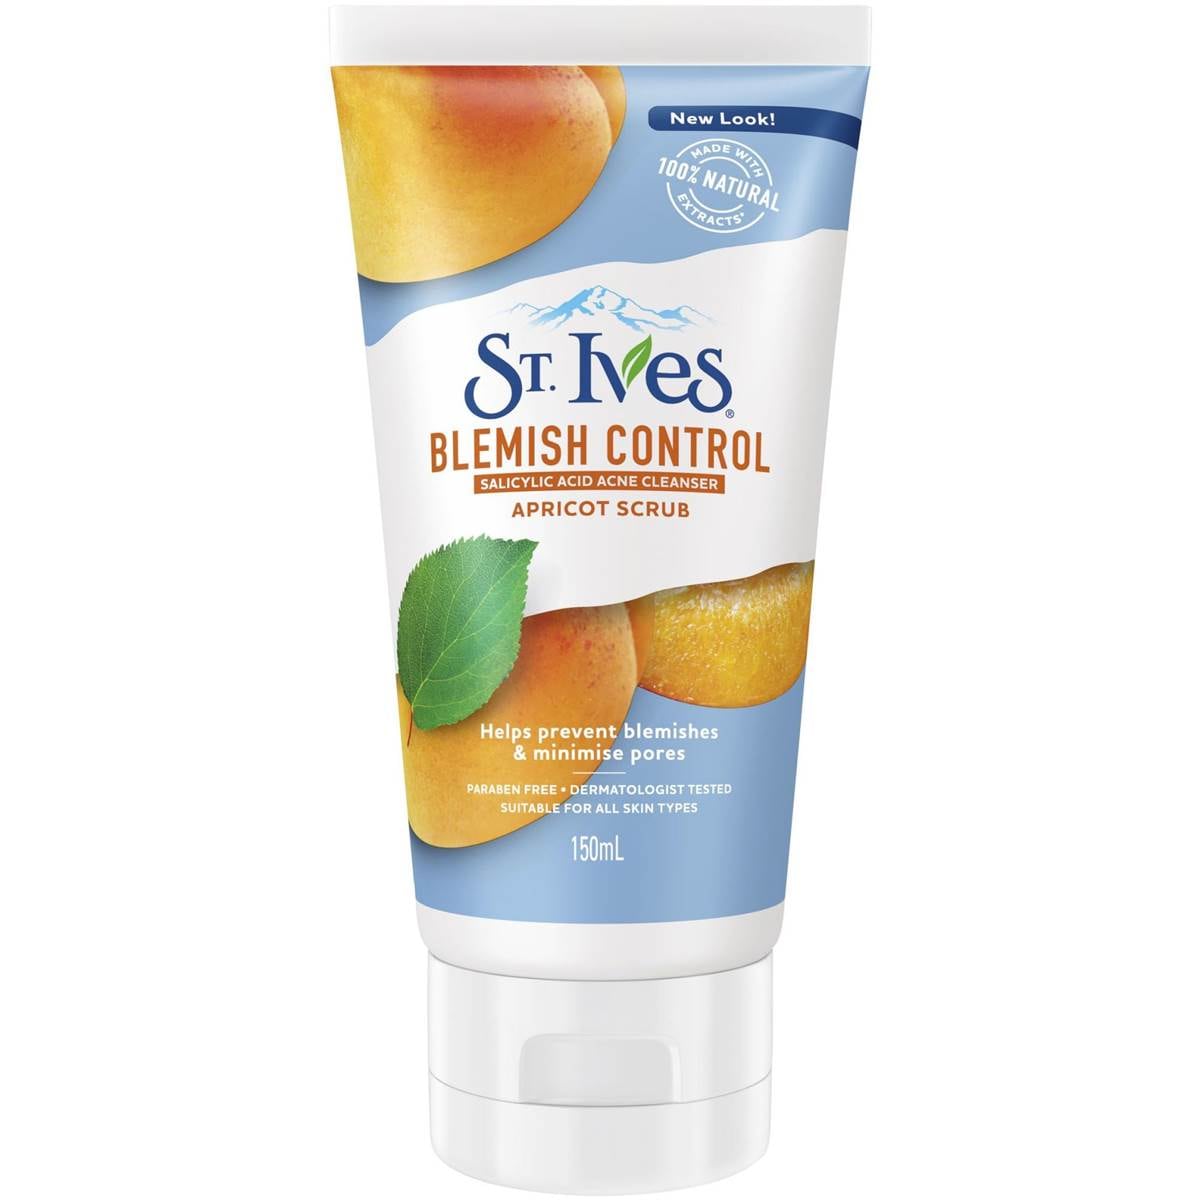 St Ives Blemish Control Apricot Face Scrub 150ml